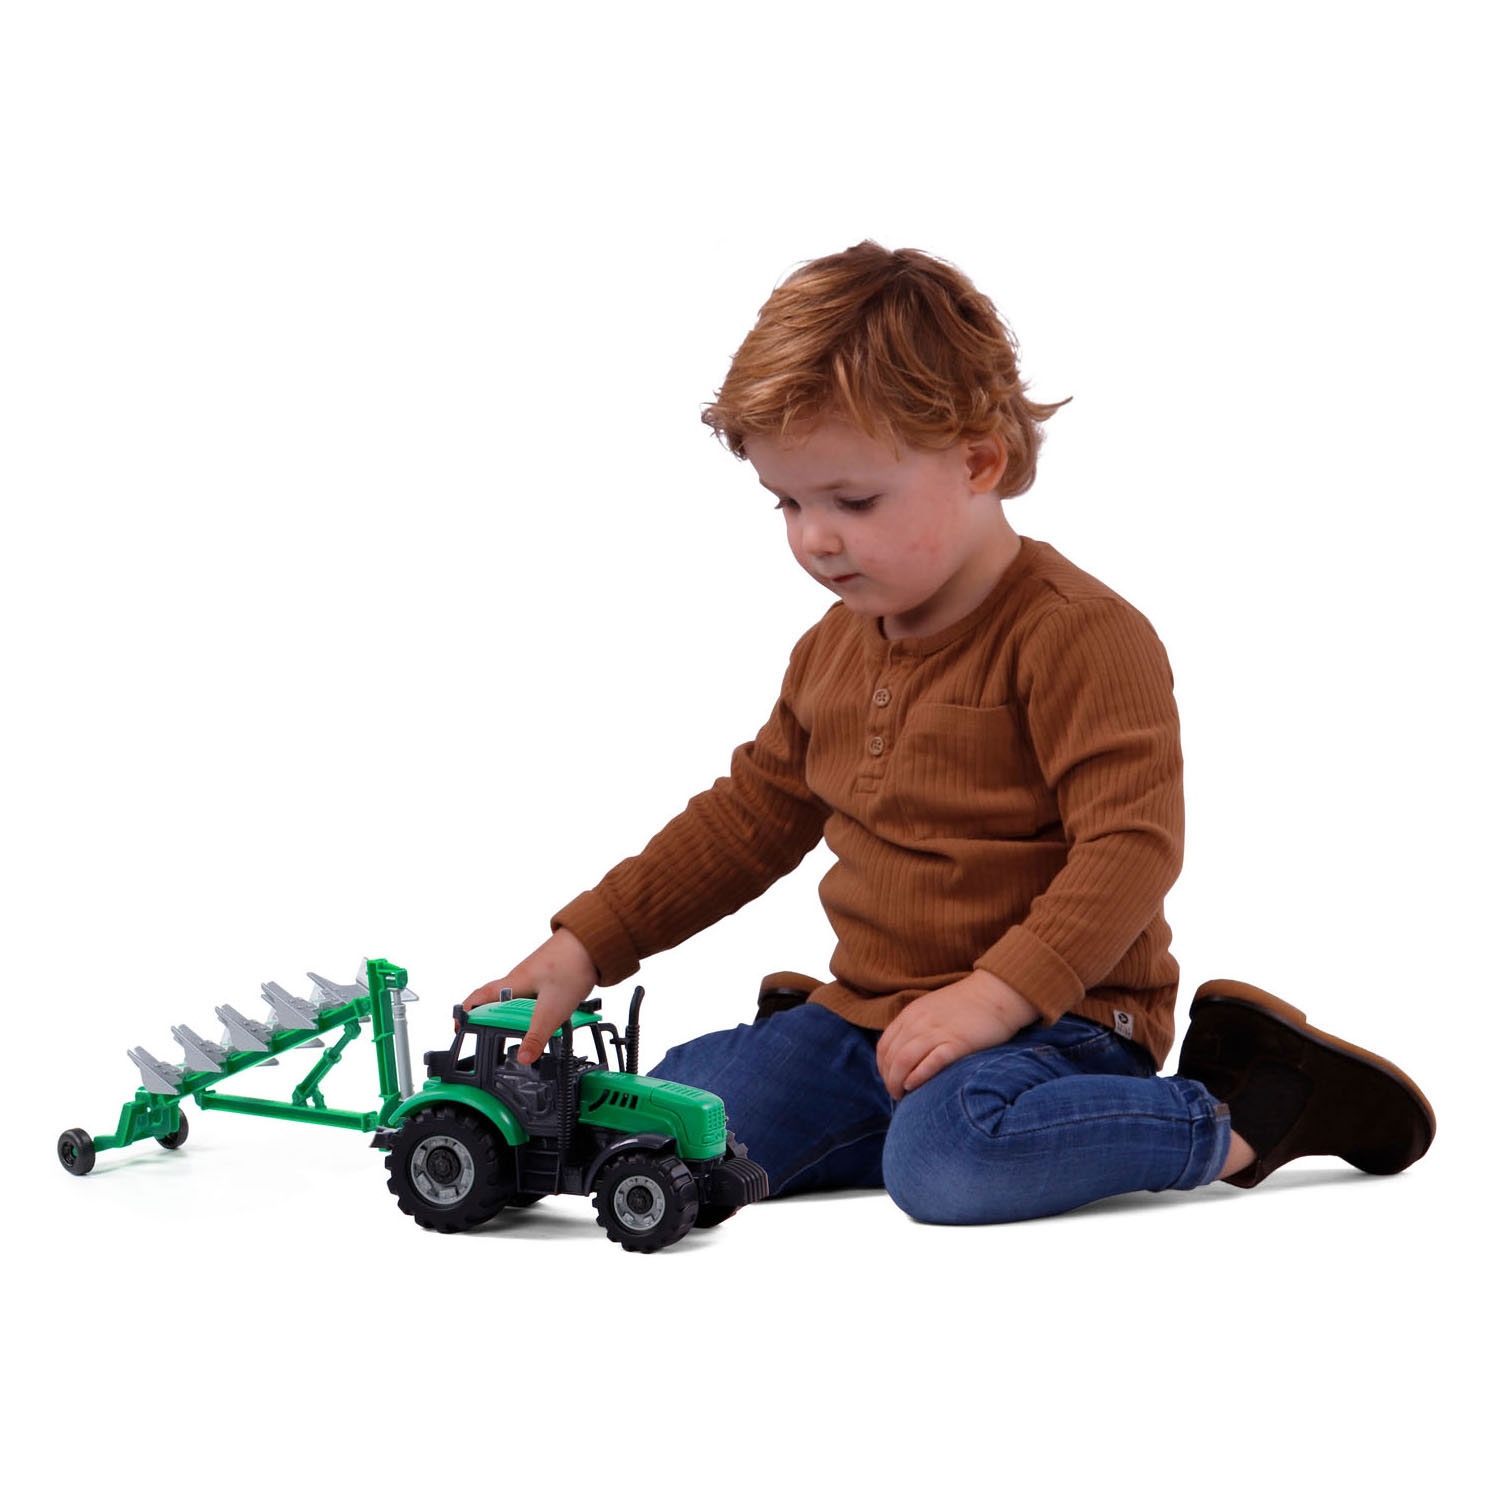 Cavallino Traktor mit grünem Pflug, Maßstab 1:32